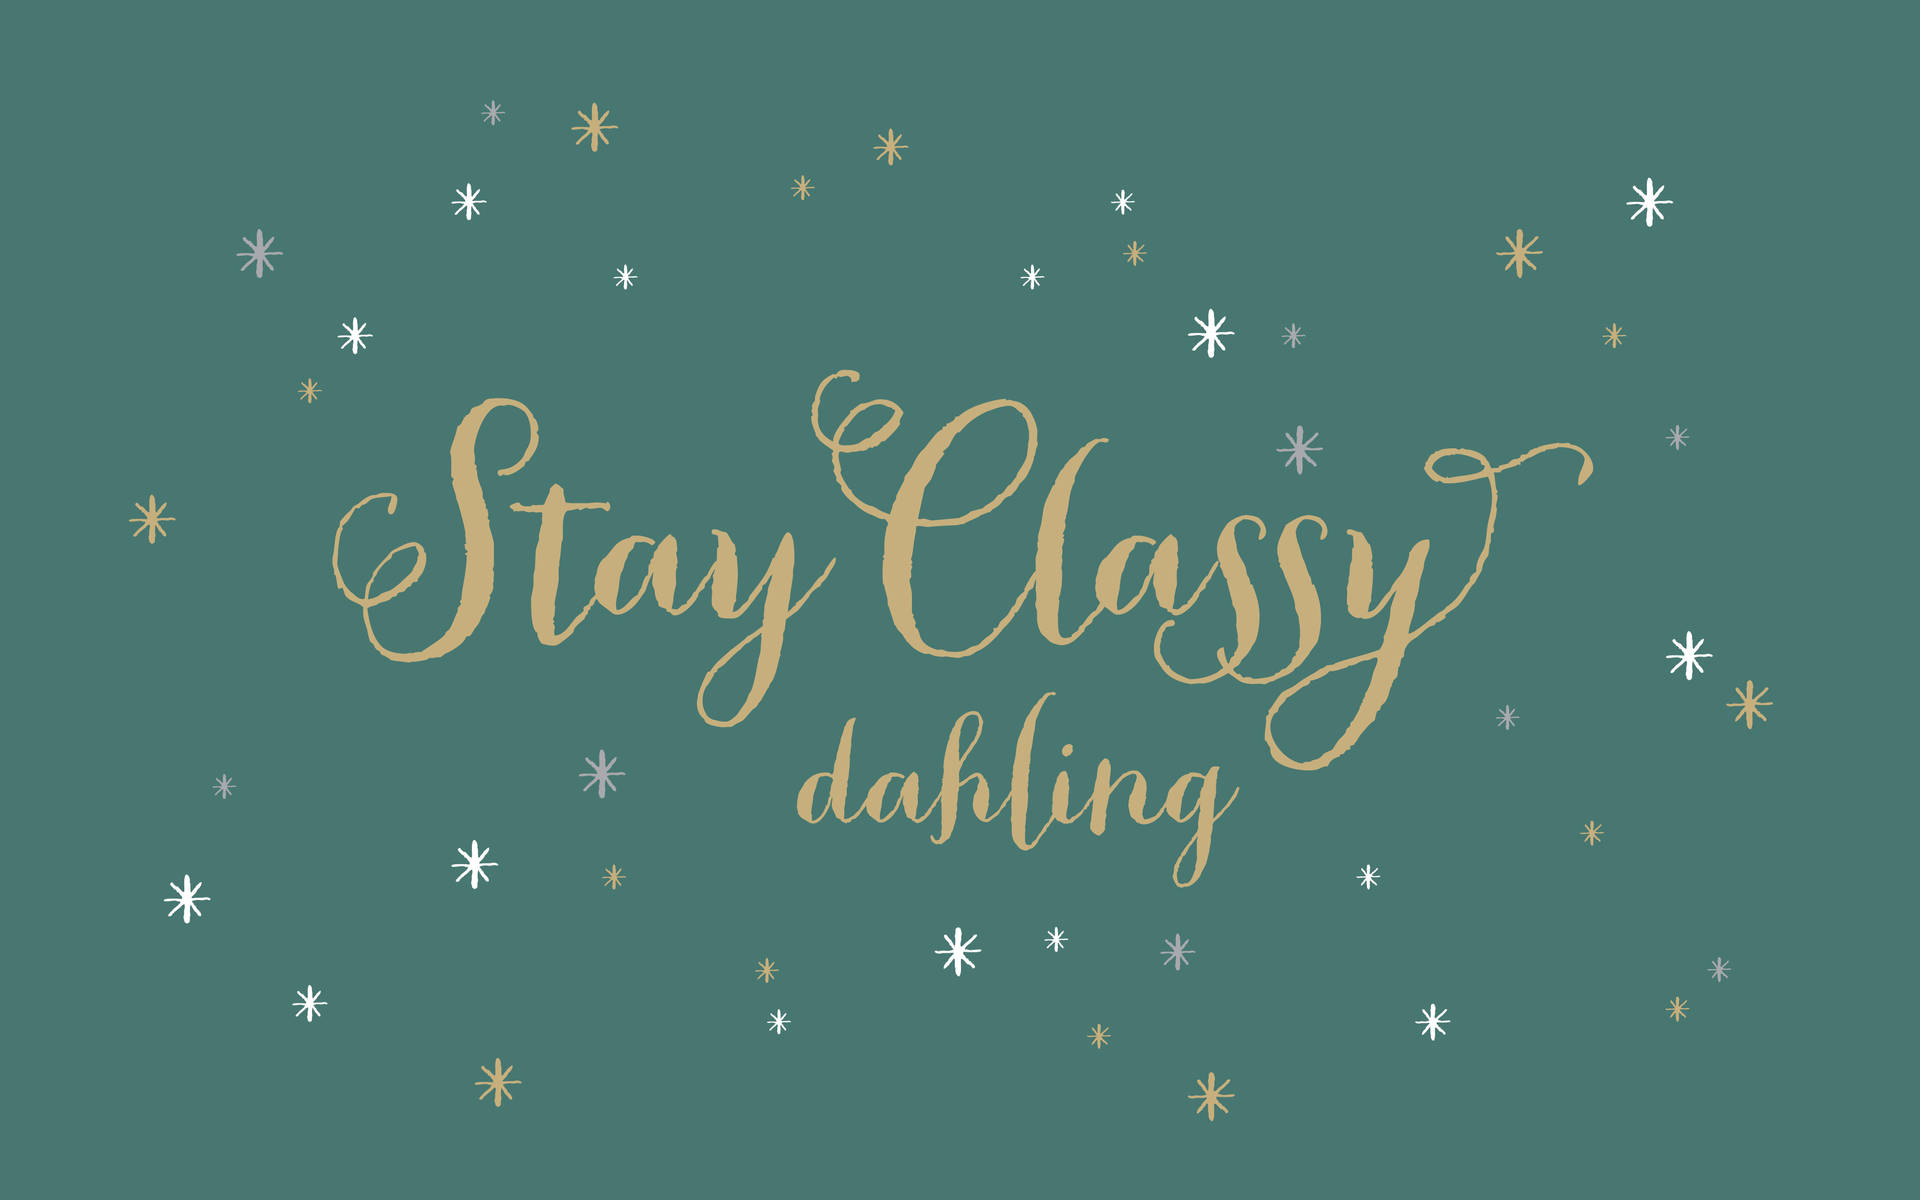 Stay Classy Darling Inspirational Desktop Background